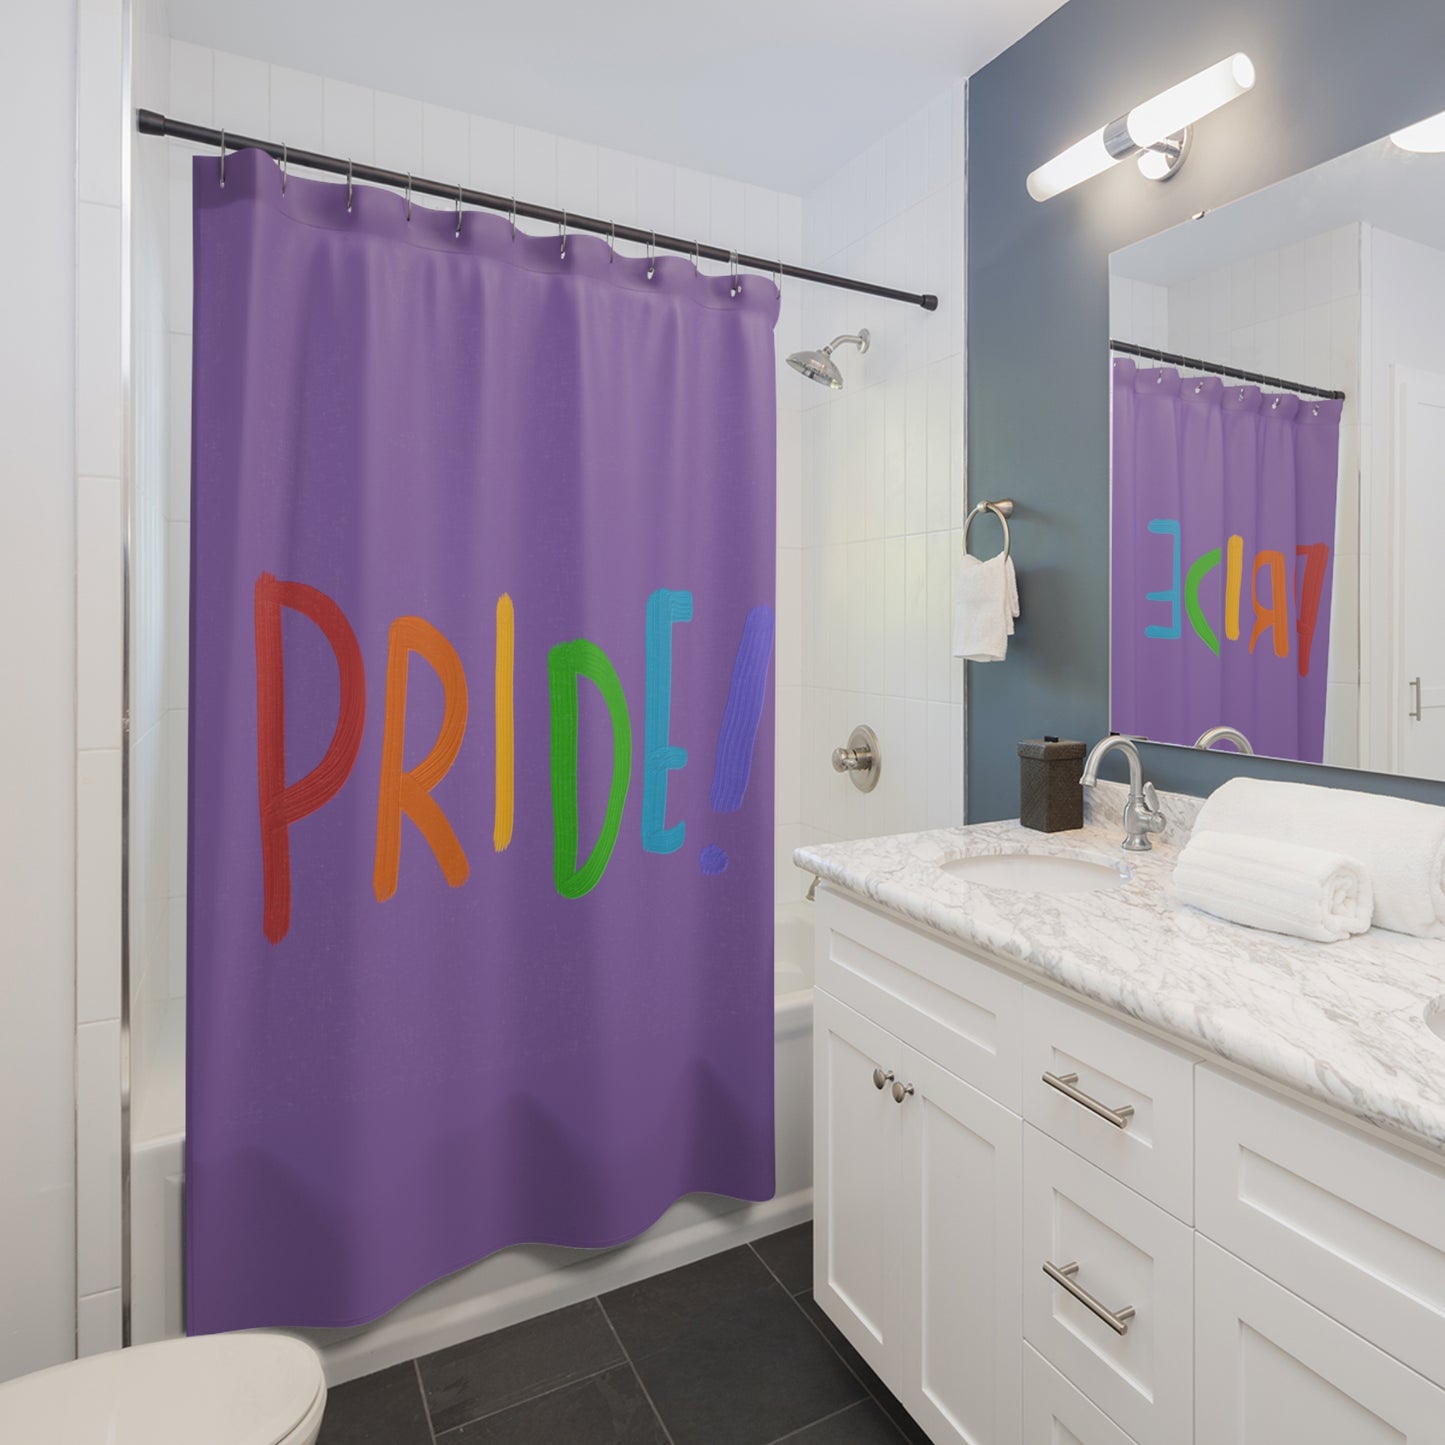 Shower Curtains: #1 LGBTQ Pride Lite Purple